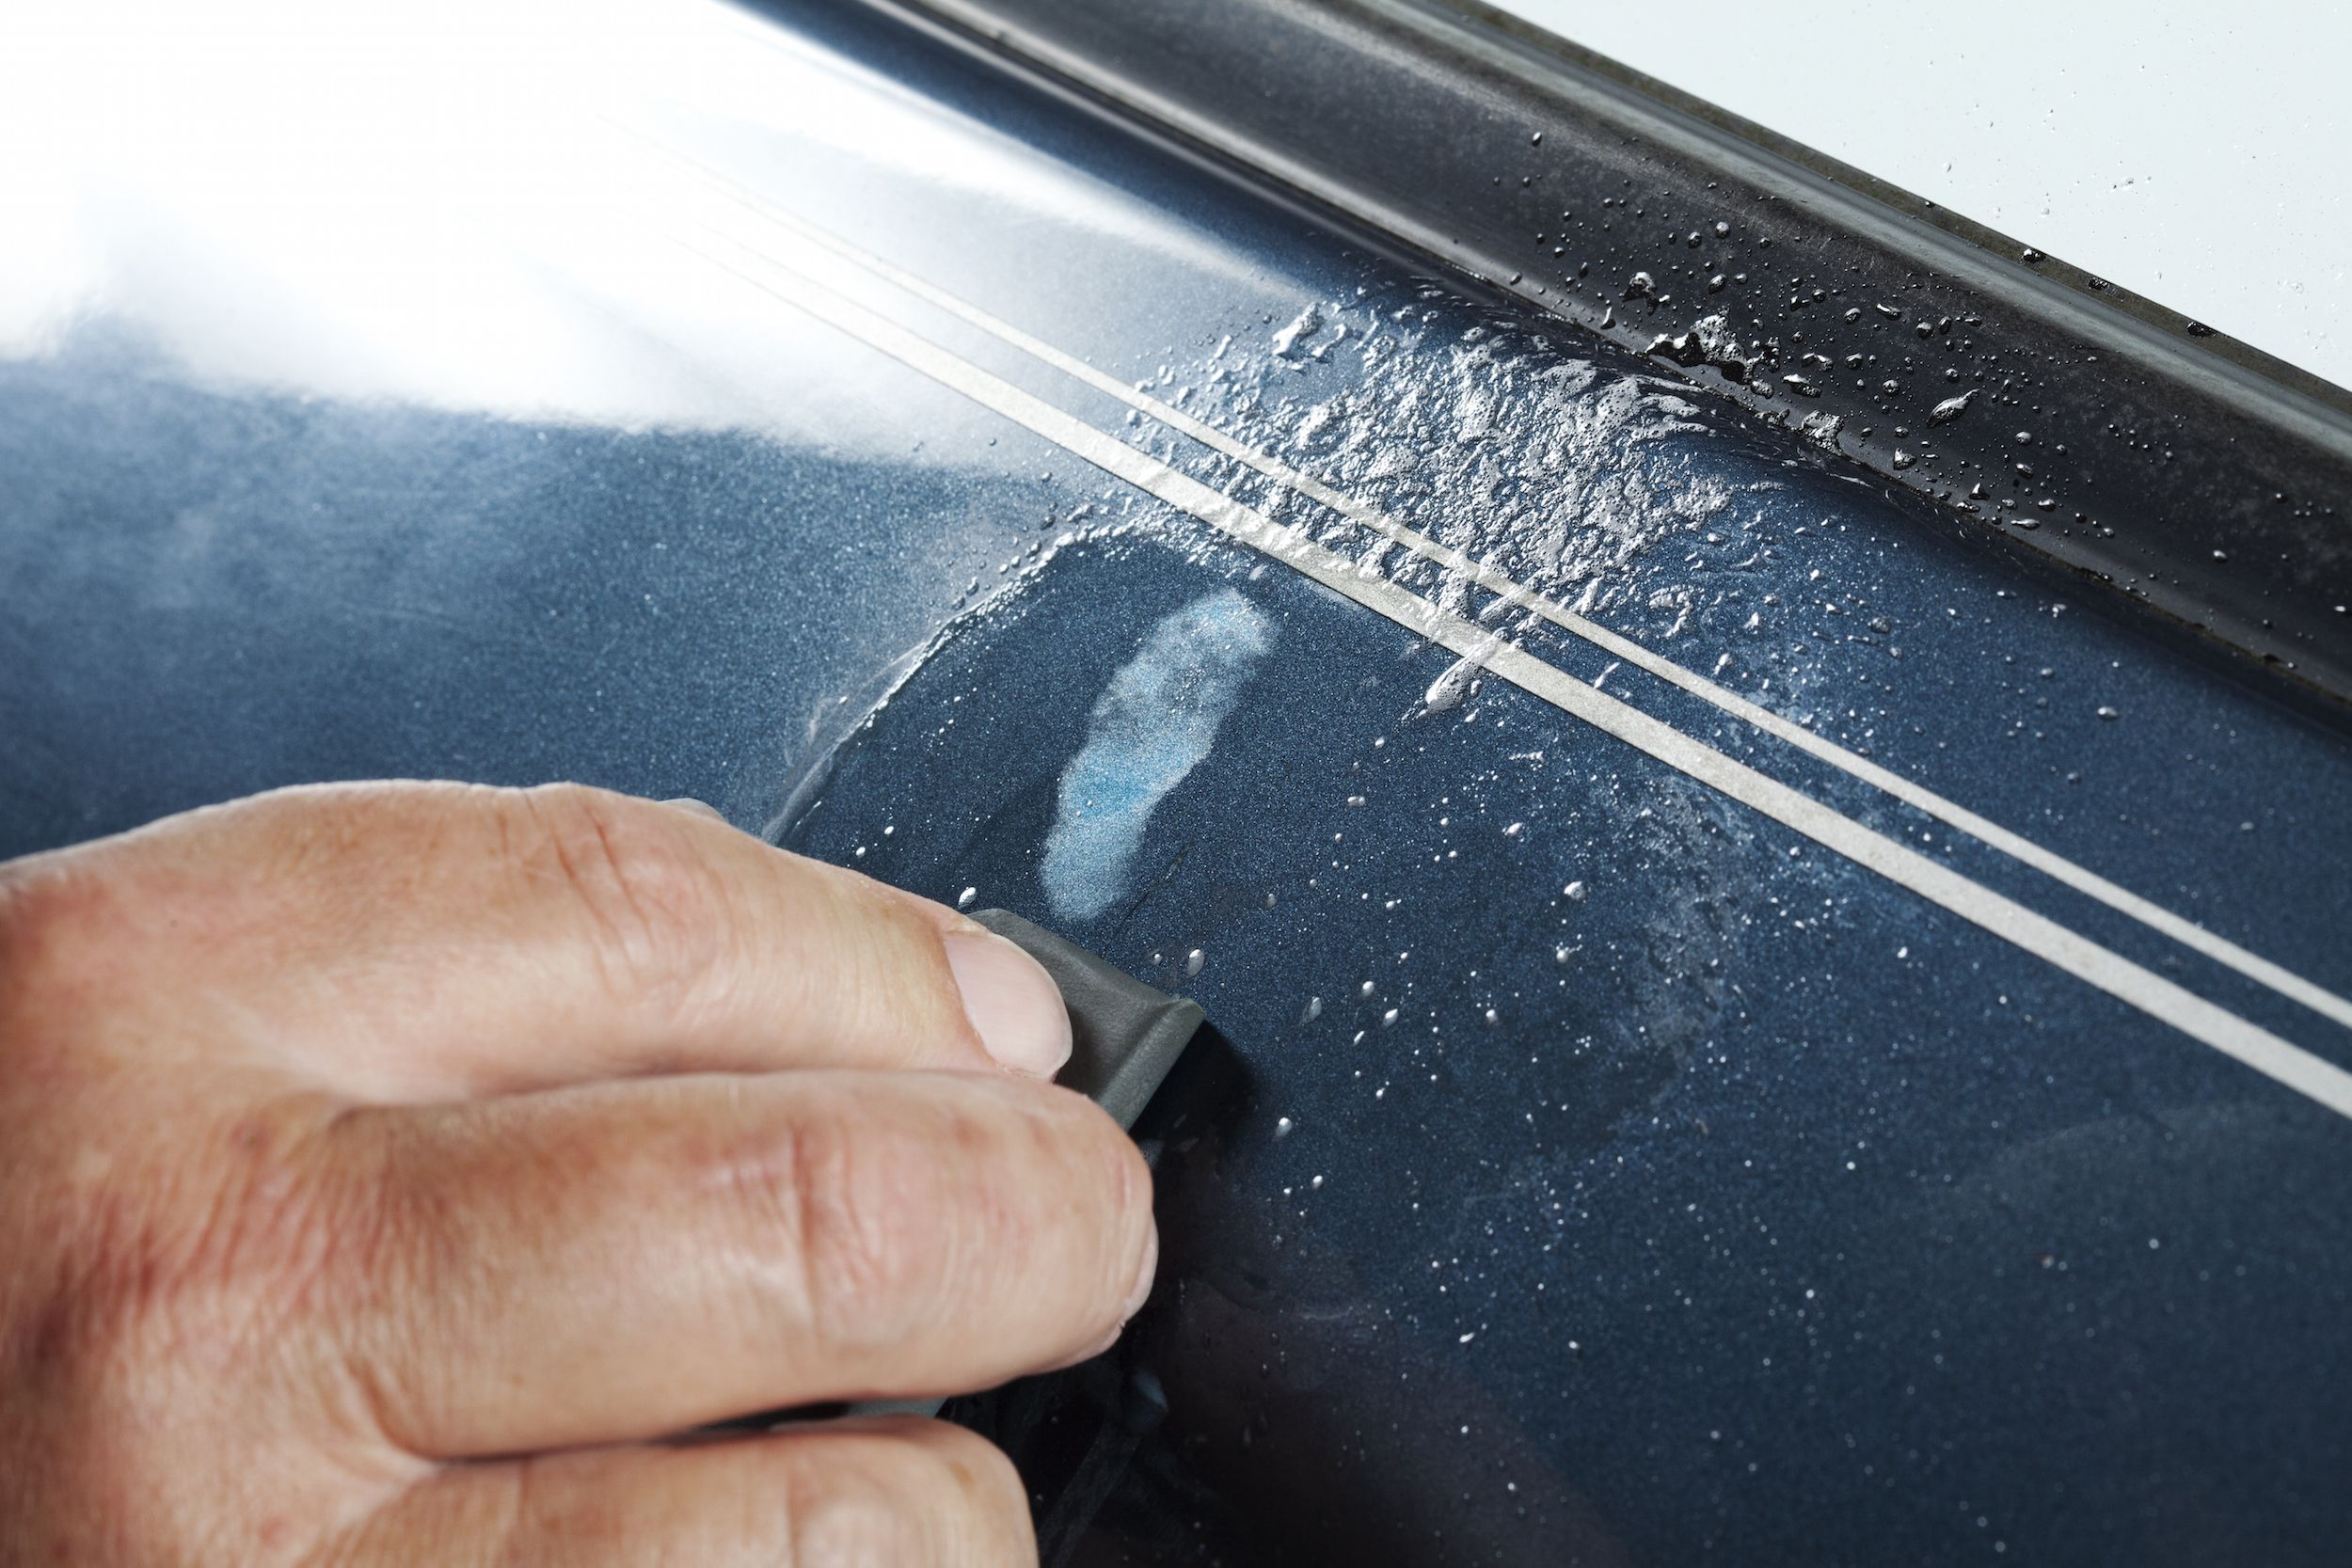  Car Scratch Remover for Deep Scratches Light Silver Universal  Car Scratch Repair Body Compound Scratch Repair Pen for Vehicles Auto  Scratch Remover Paint Scratch Removal for Cars (Light Silver) : Automotive